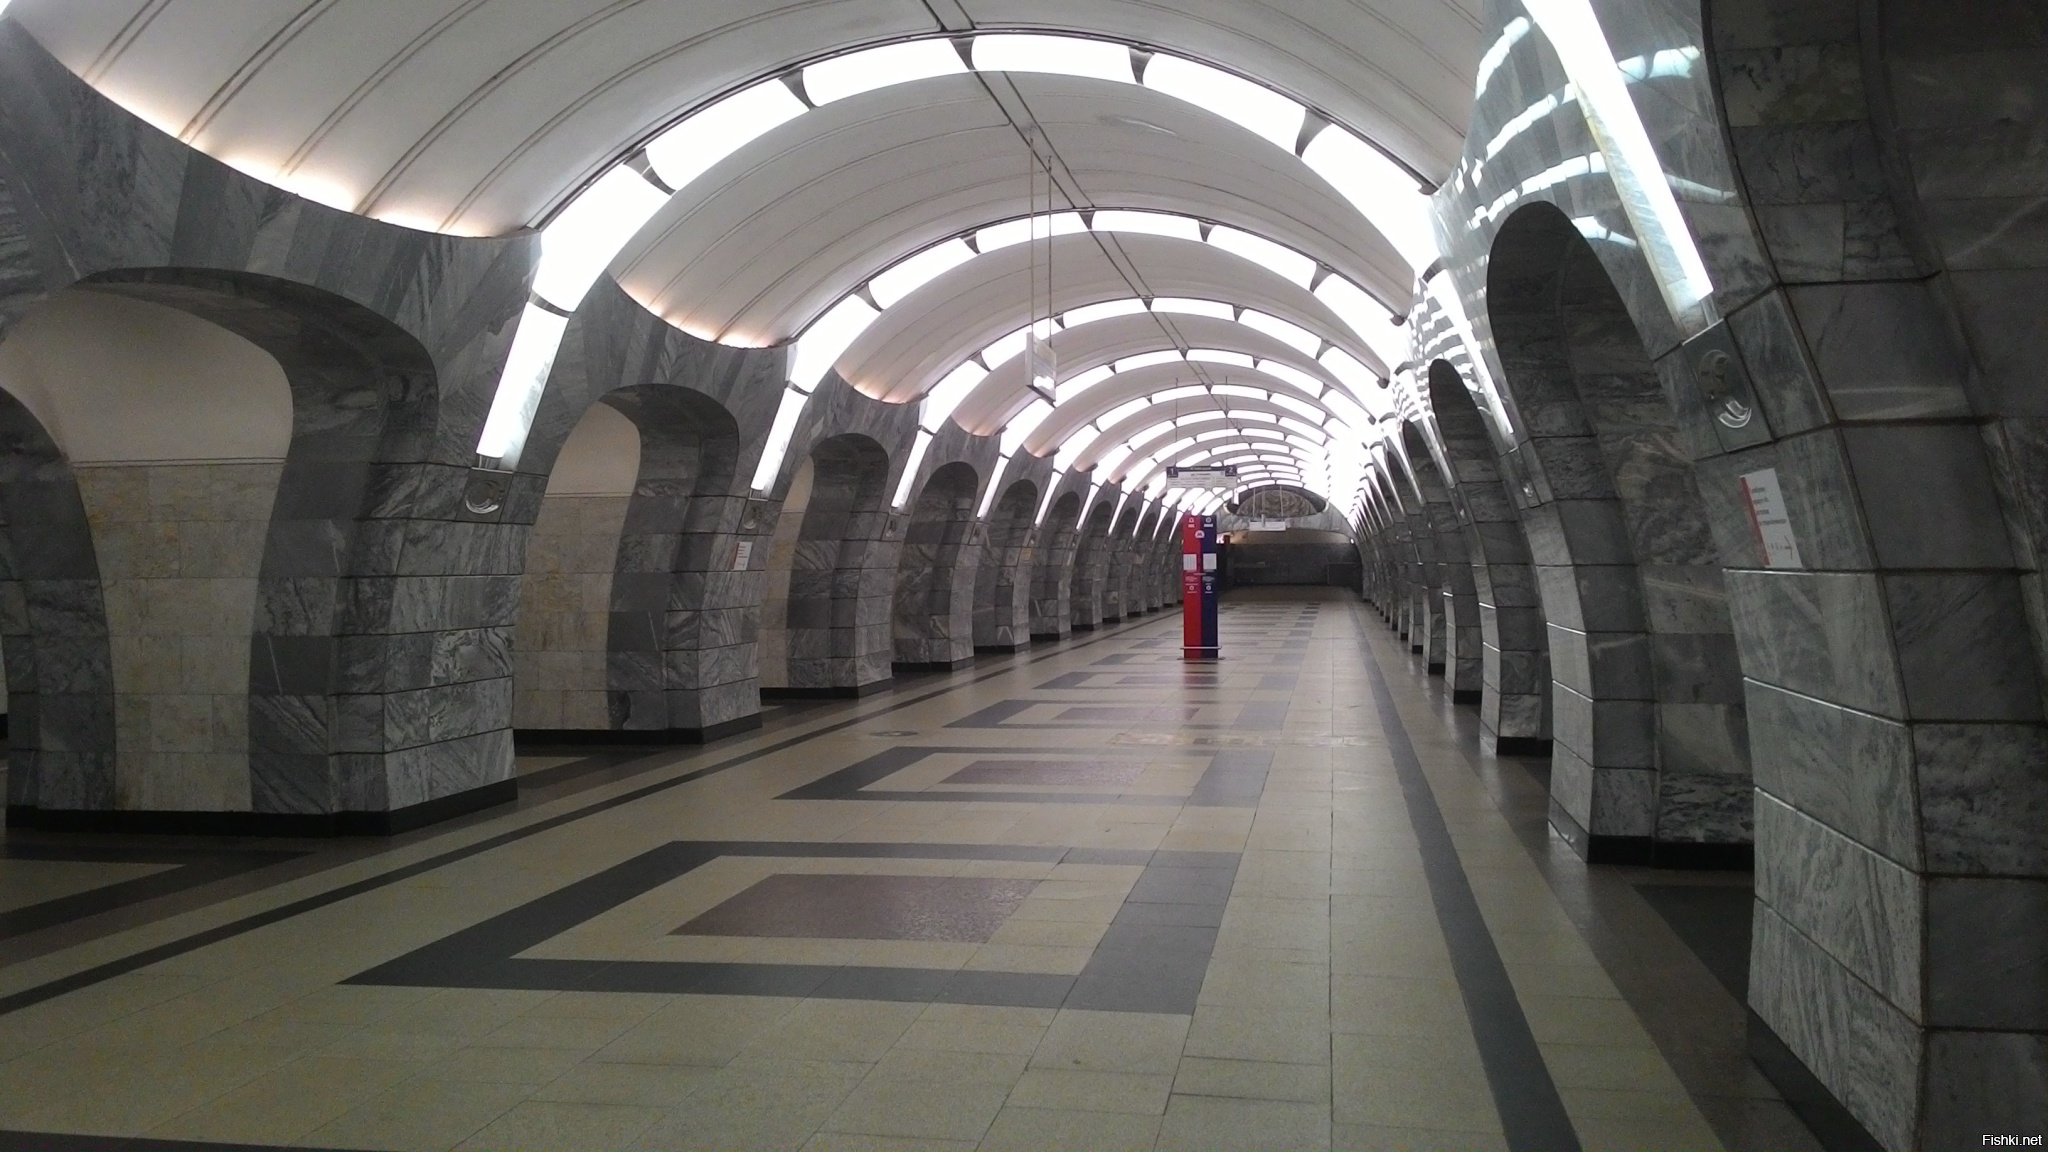 сретенский бульвар метро фото